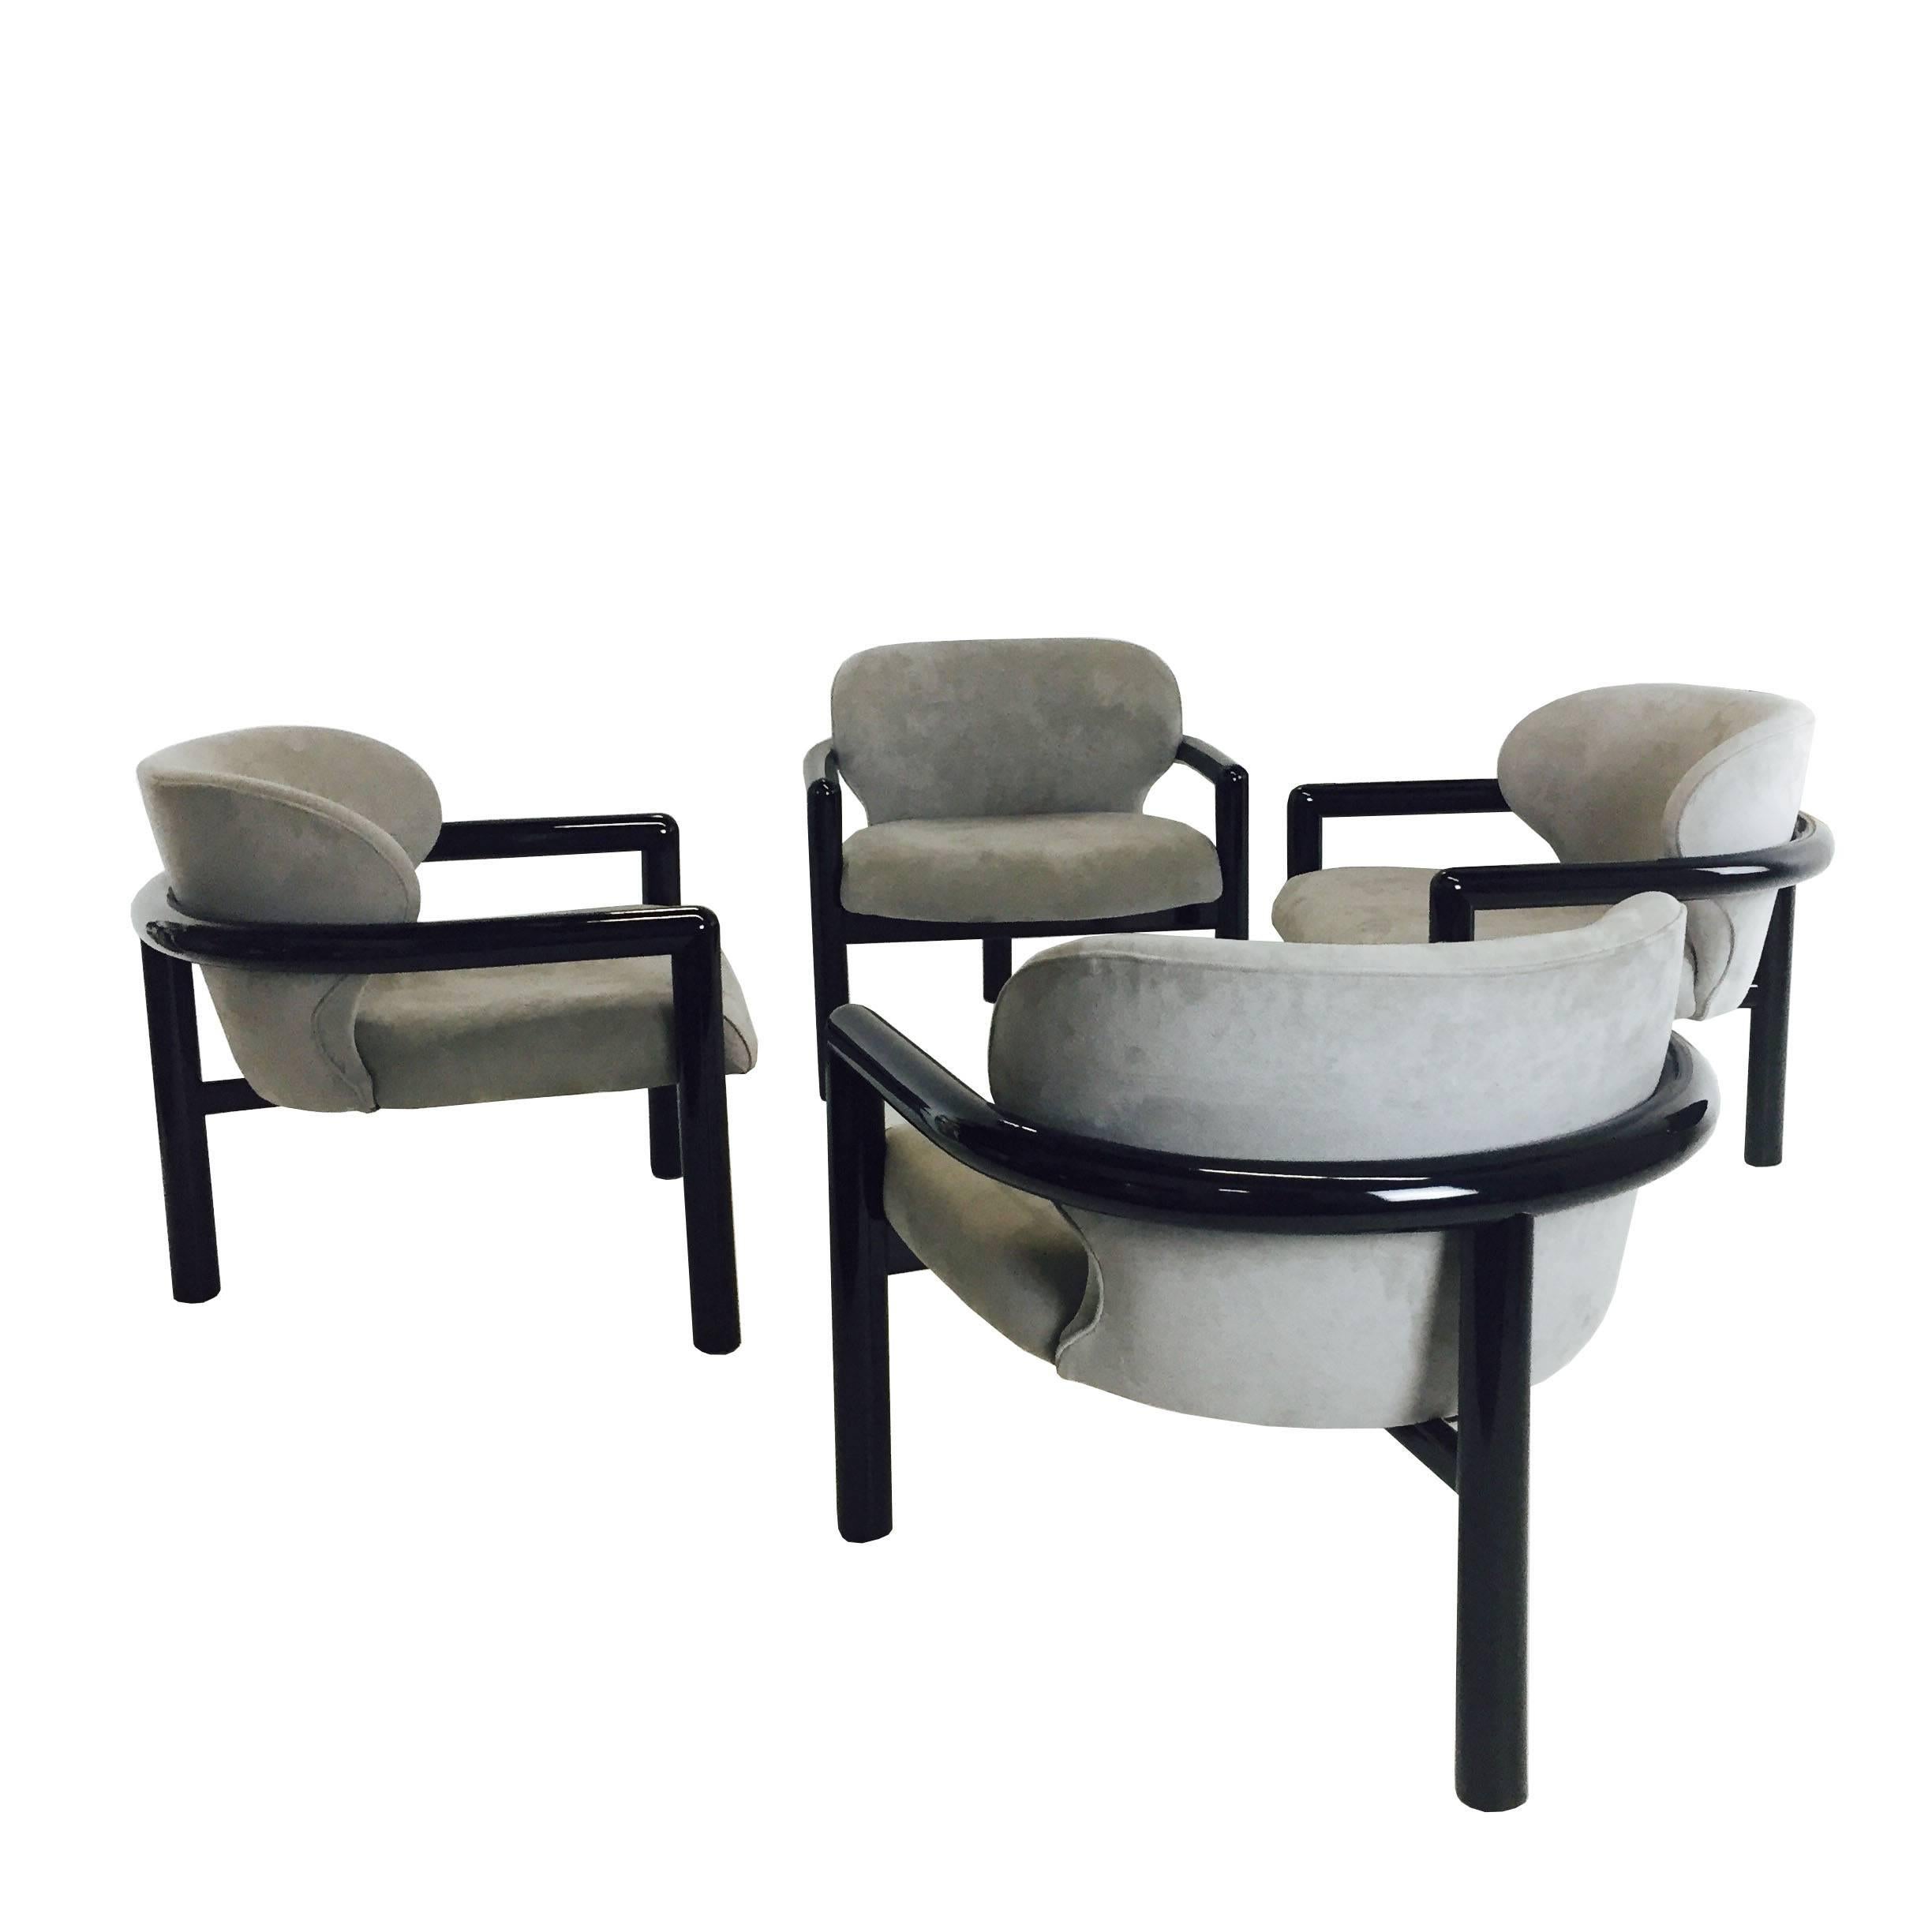 20th Century Pair of Three Legged Lounge Chairs